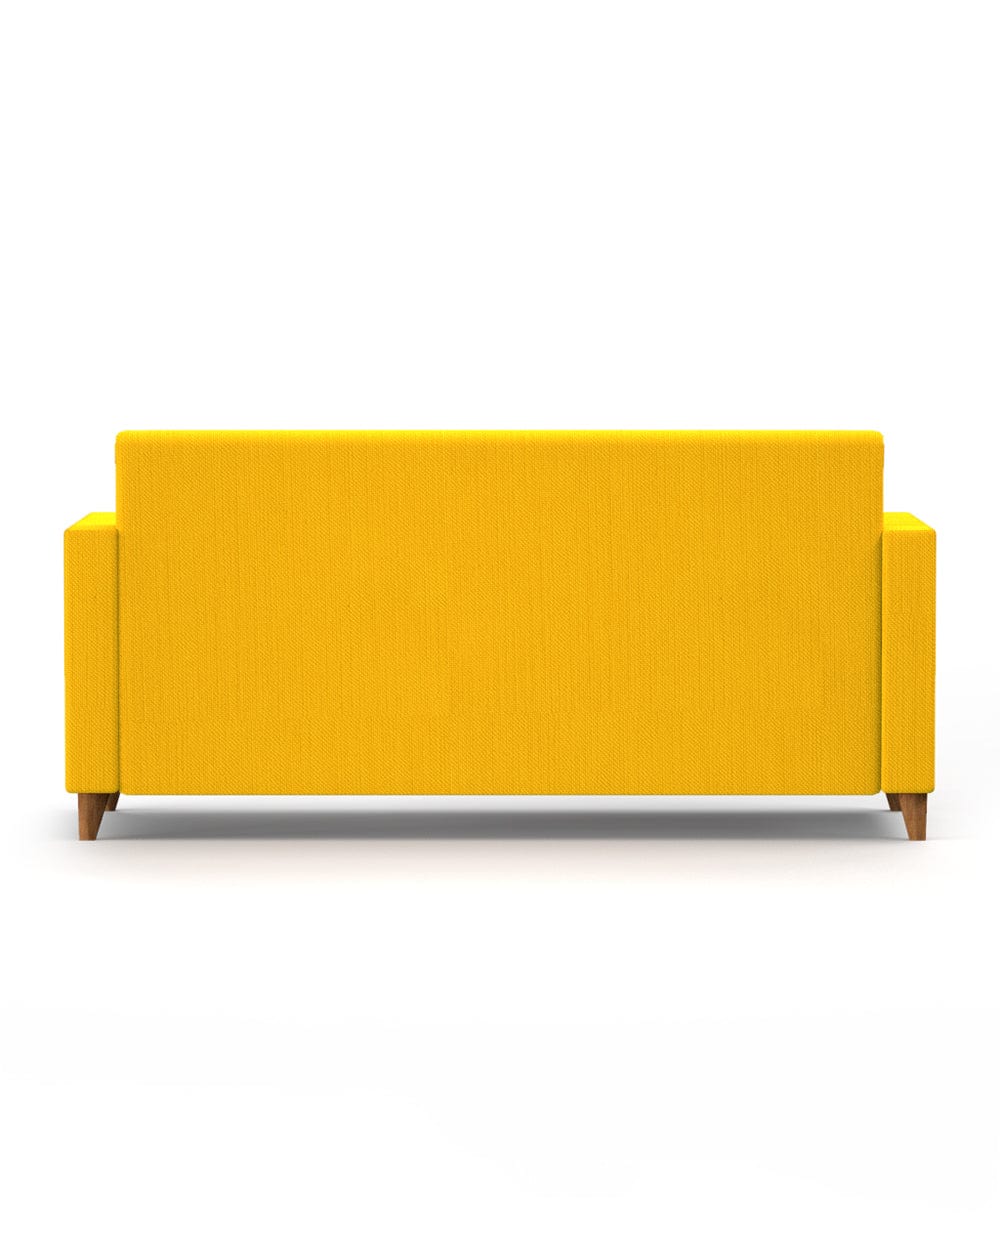 Chumbak Modern Couch-Sahara Mustard